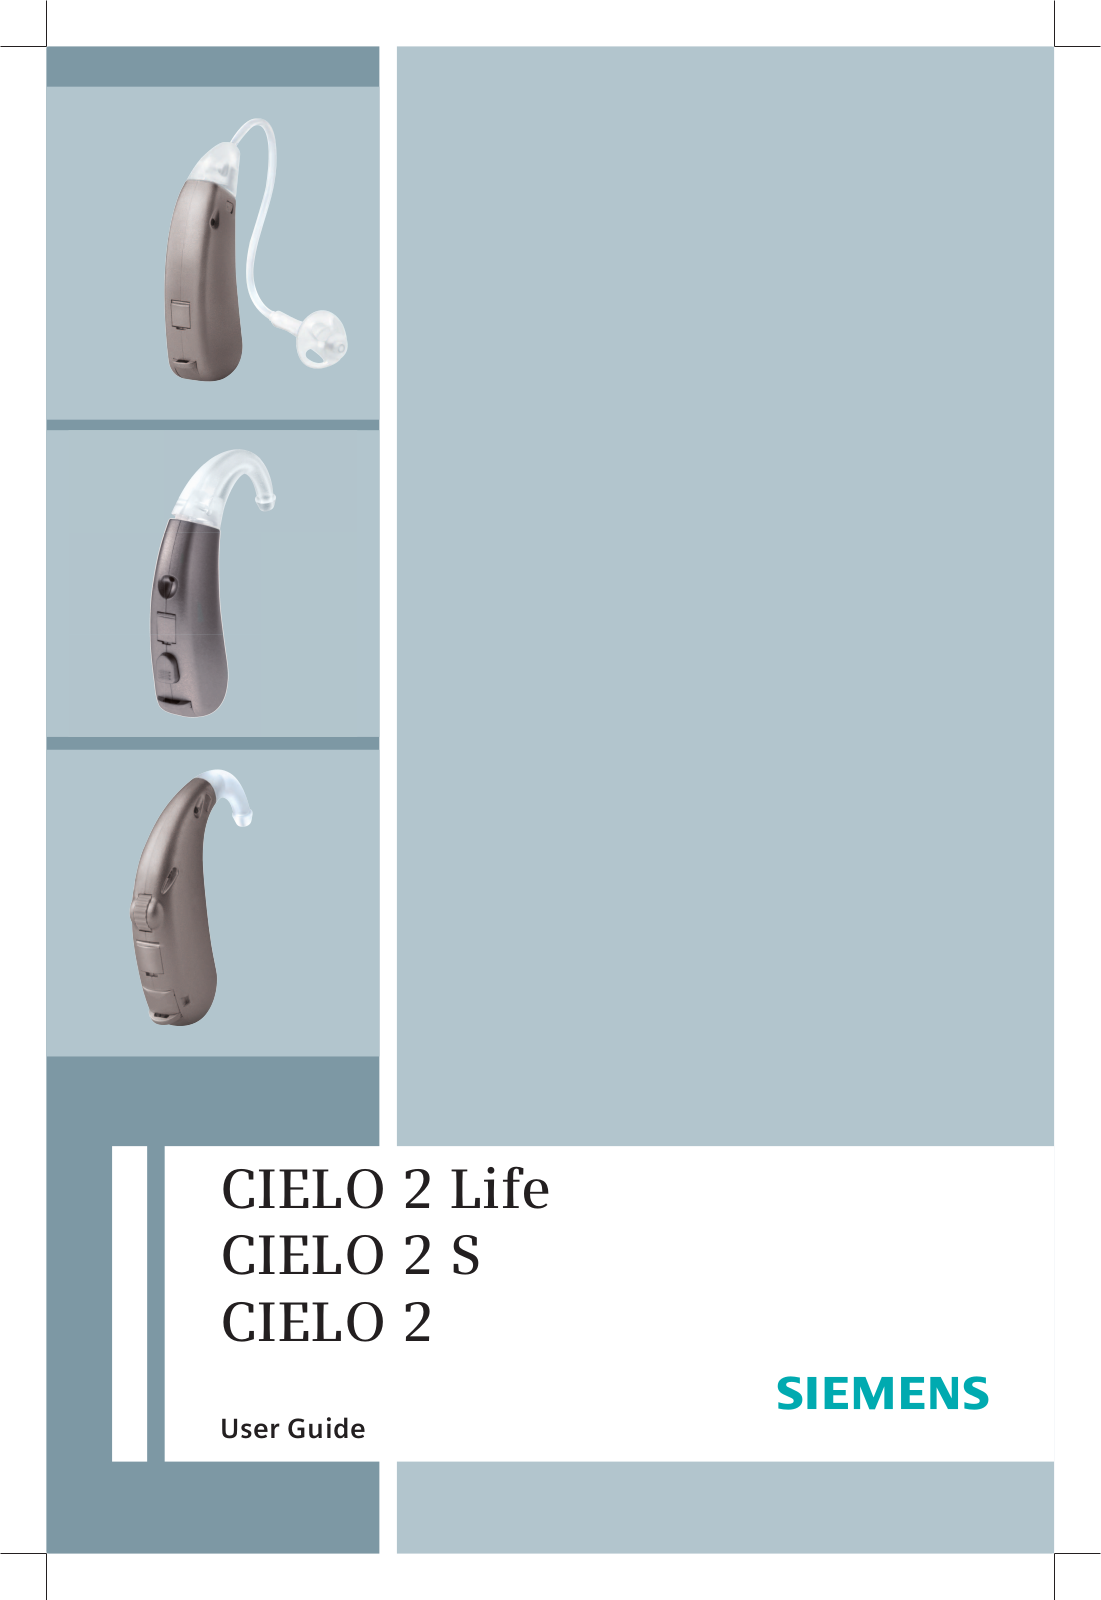 Siemens CIELO 2 Life, CIELO 2 S, CIELO 2 User Guide